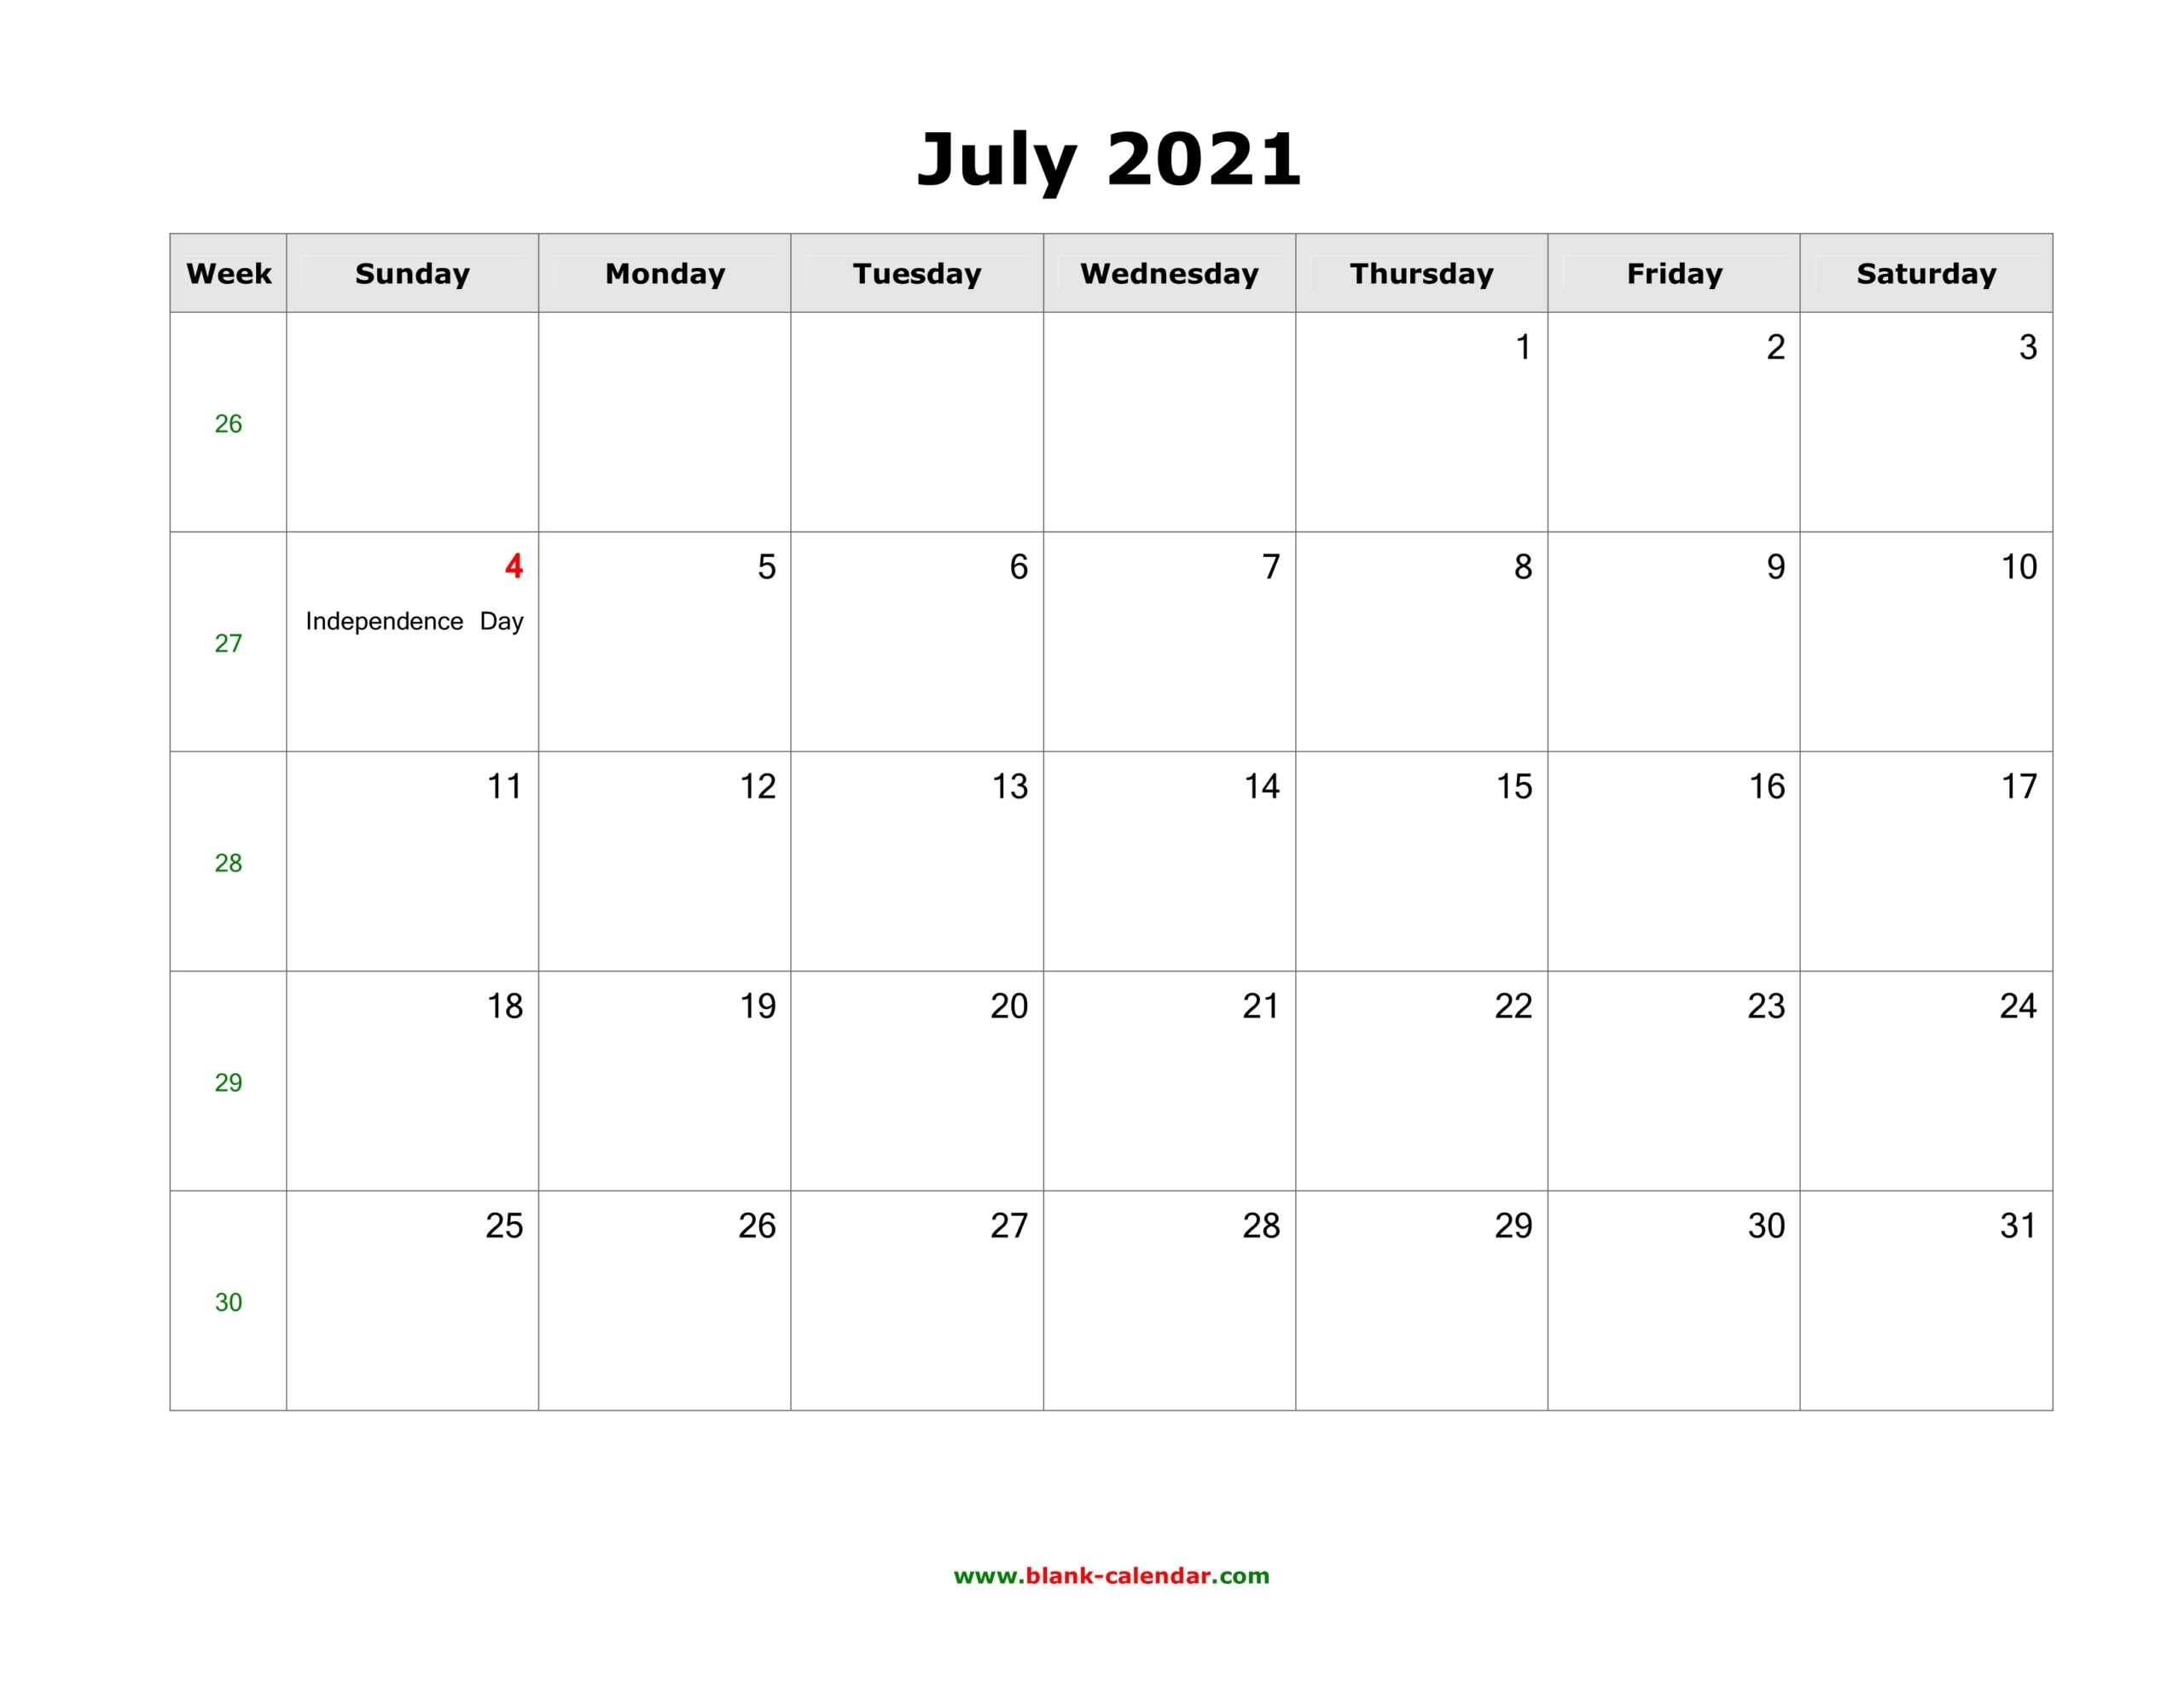 June 2021 Calendar Printable With Holidays | 2021 Printable Calendars Free Printable June 2021 Calendar With Holidays